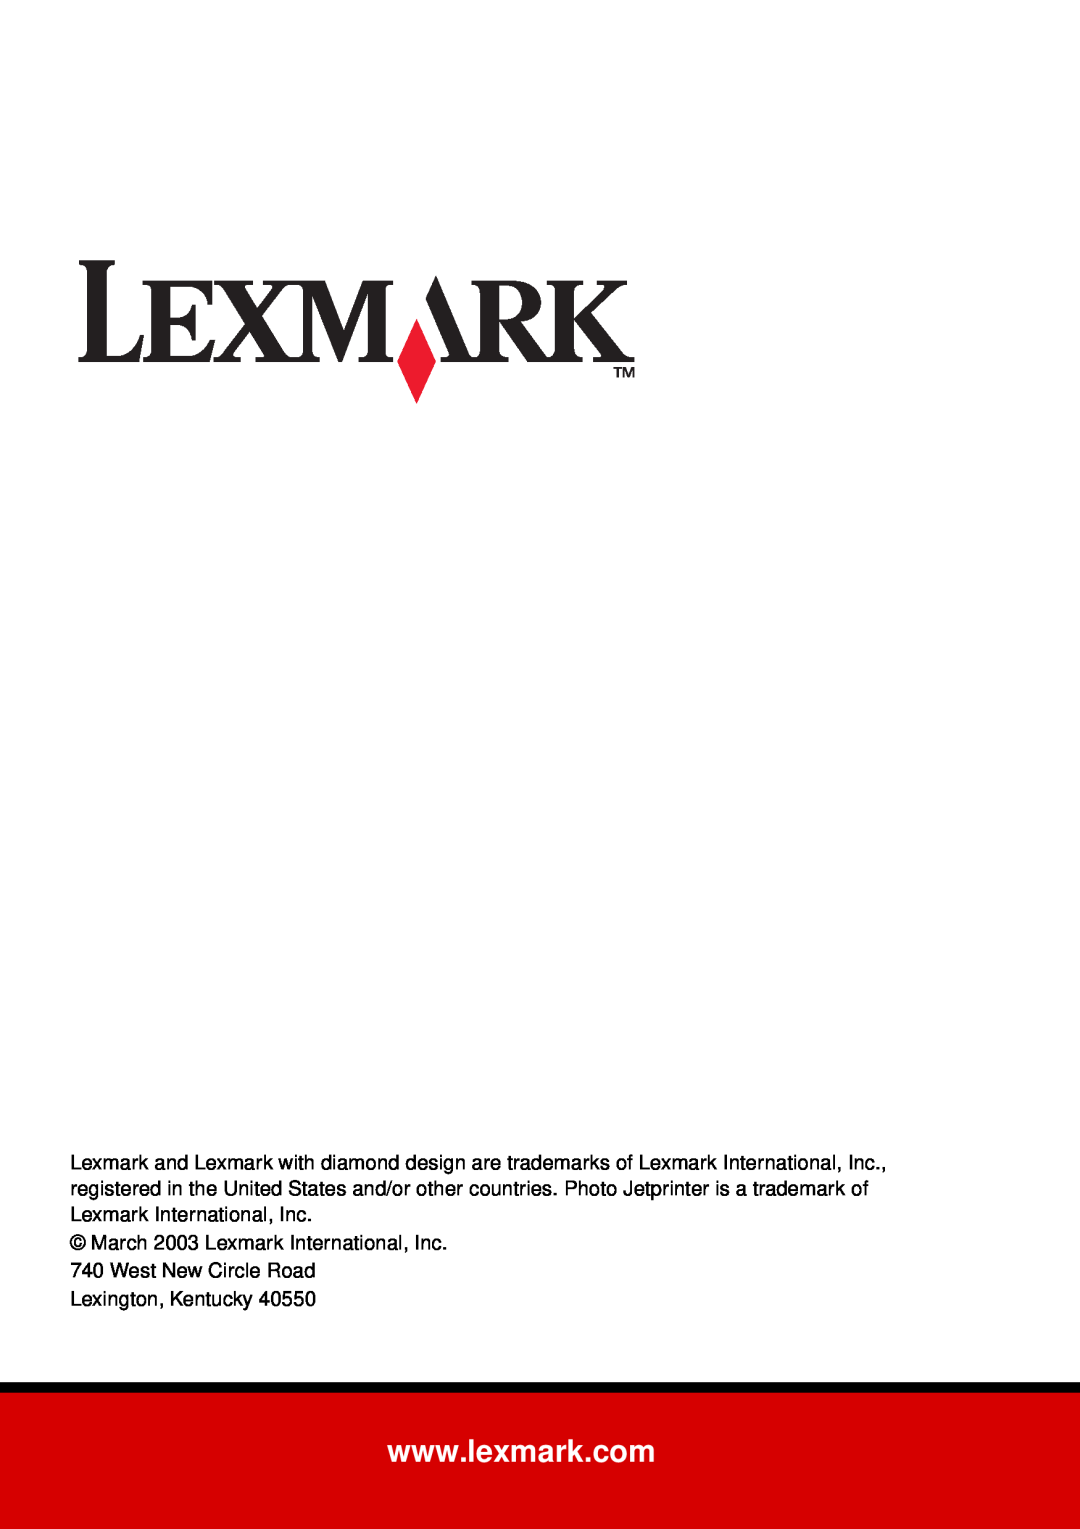 Lexmark P700 manual March 2003 Lexmark International, Inc, West New Circle Road Lexington, Kentucky 